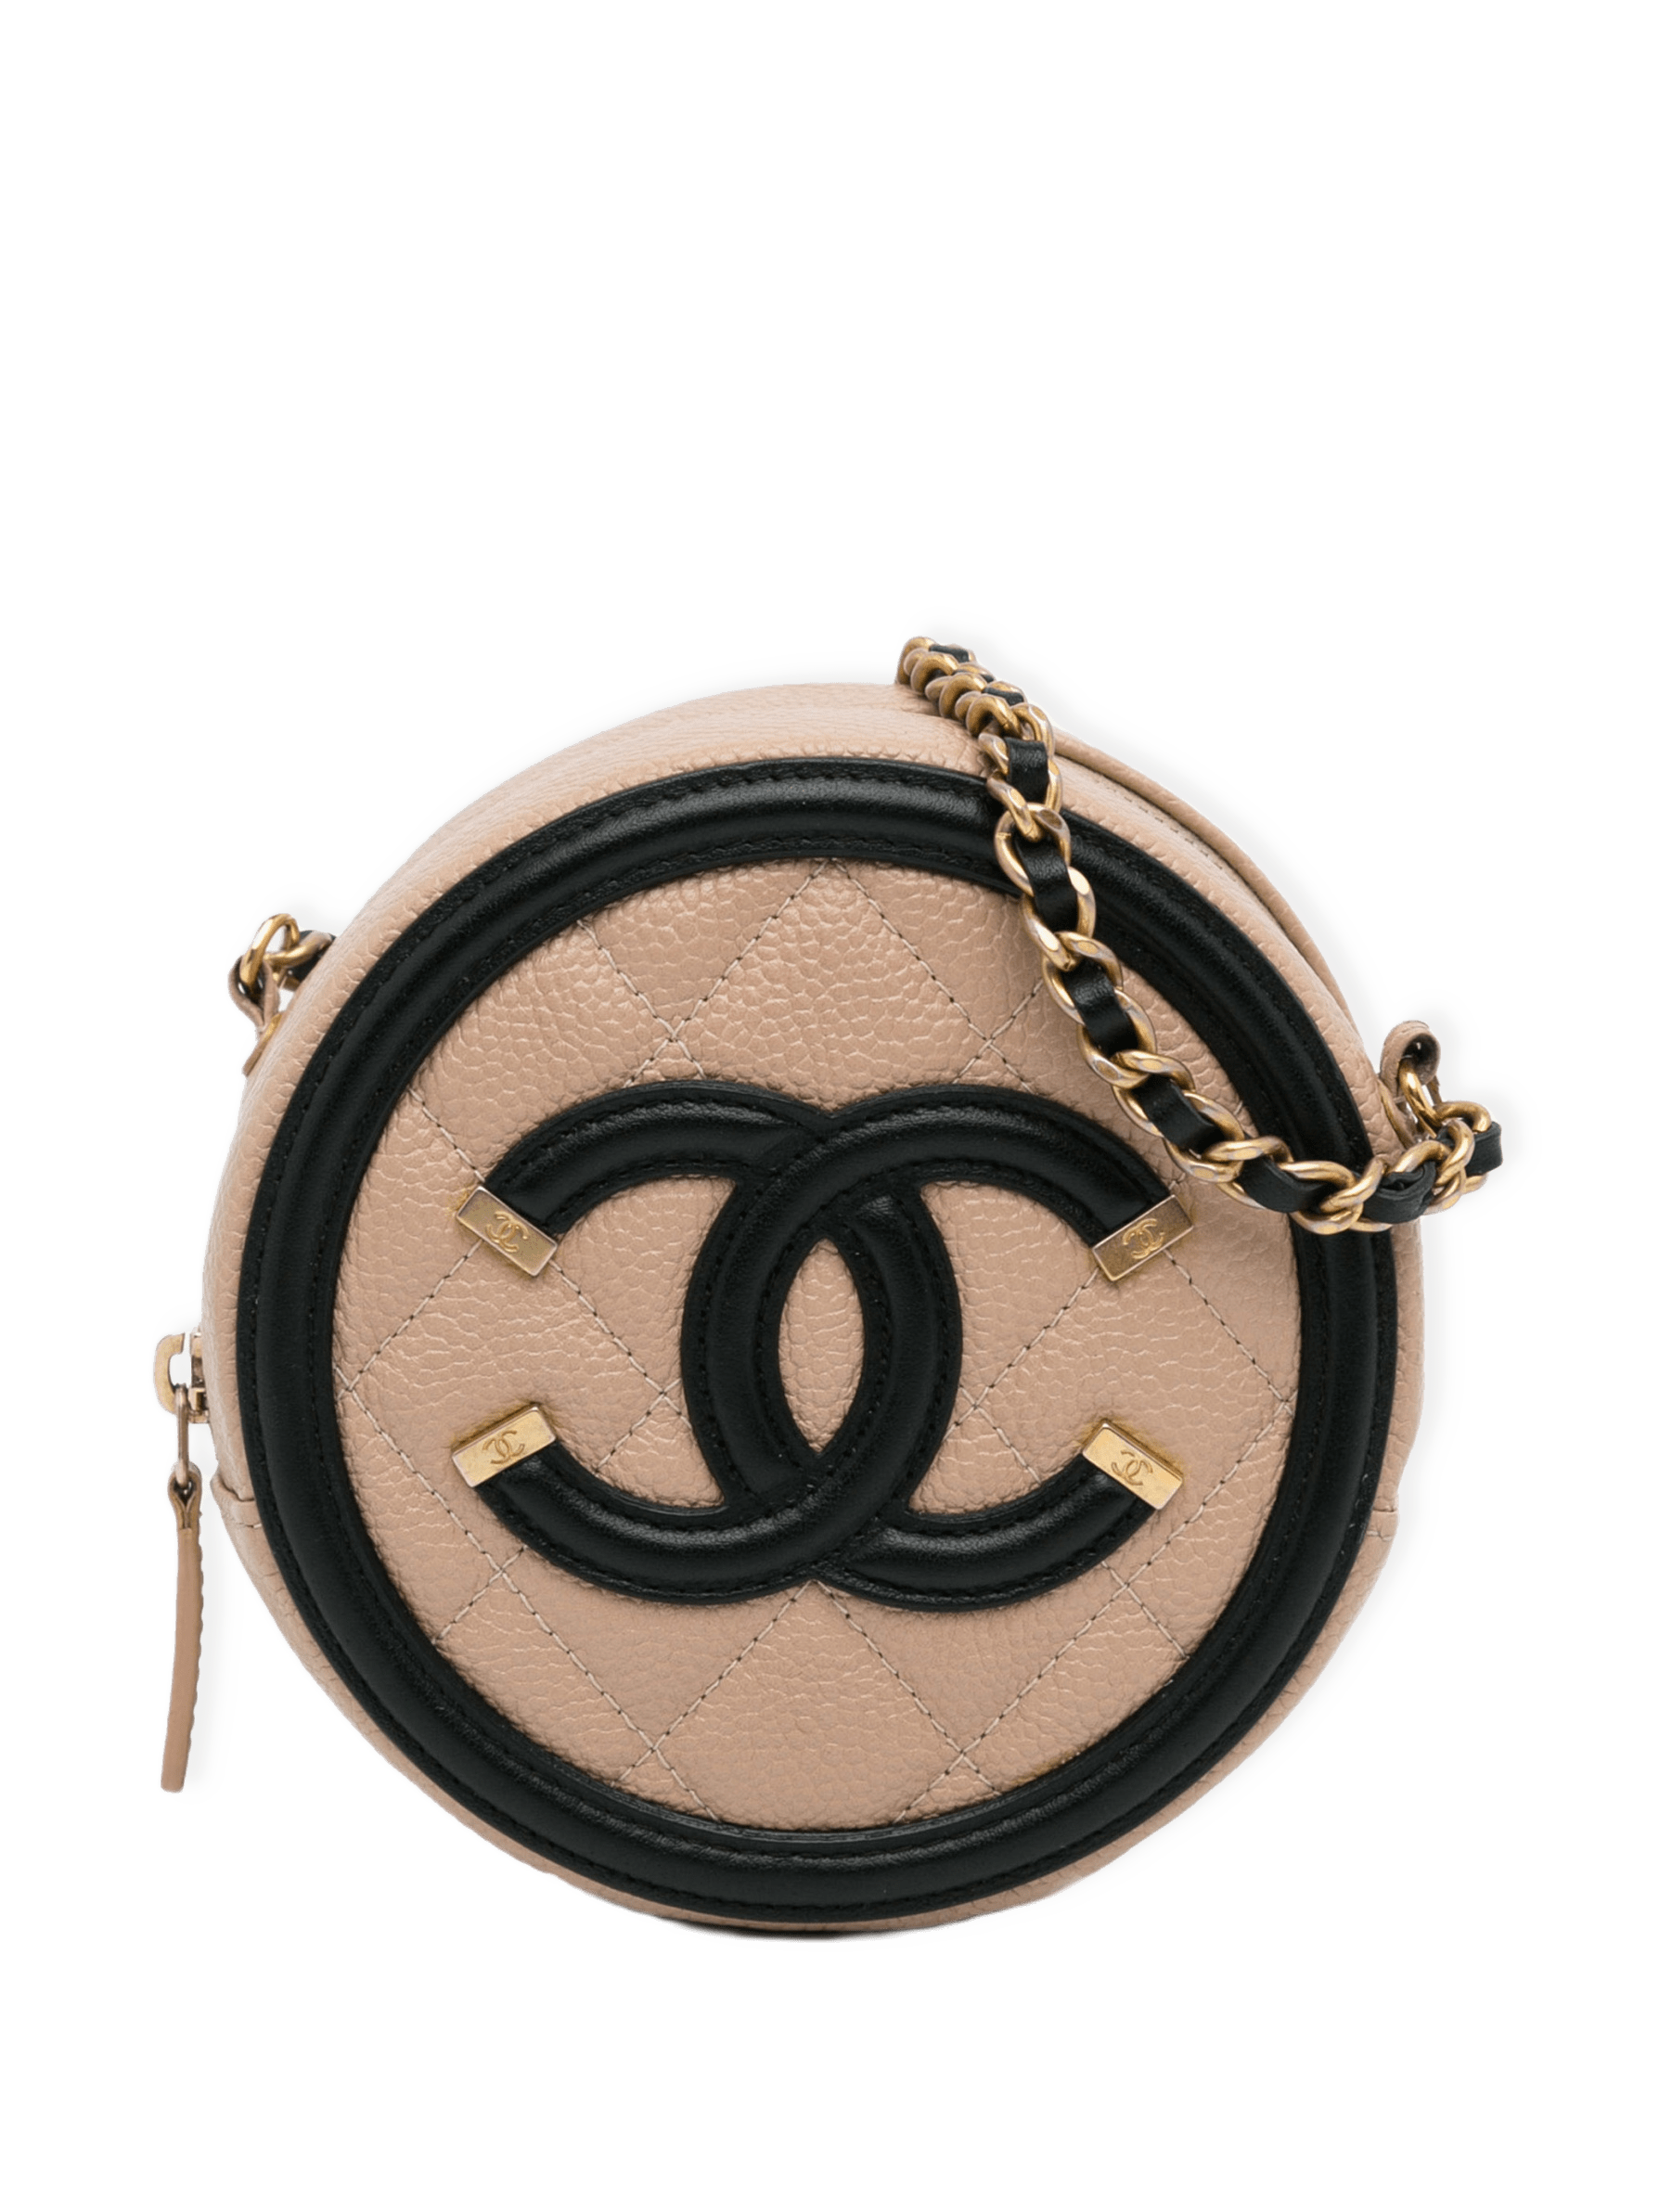 Chanel Cc Filigree Caviar Round Crossbody Bag från Luxclusif